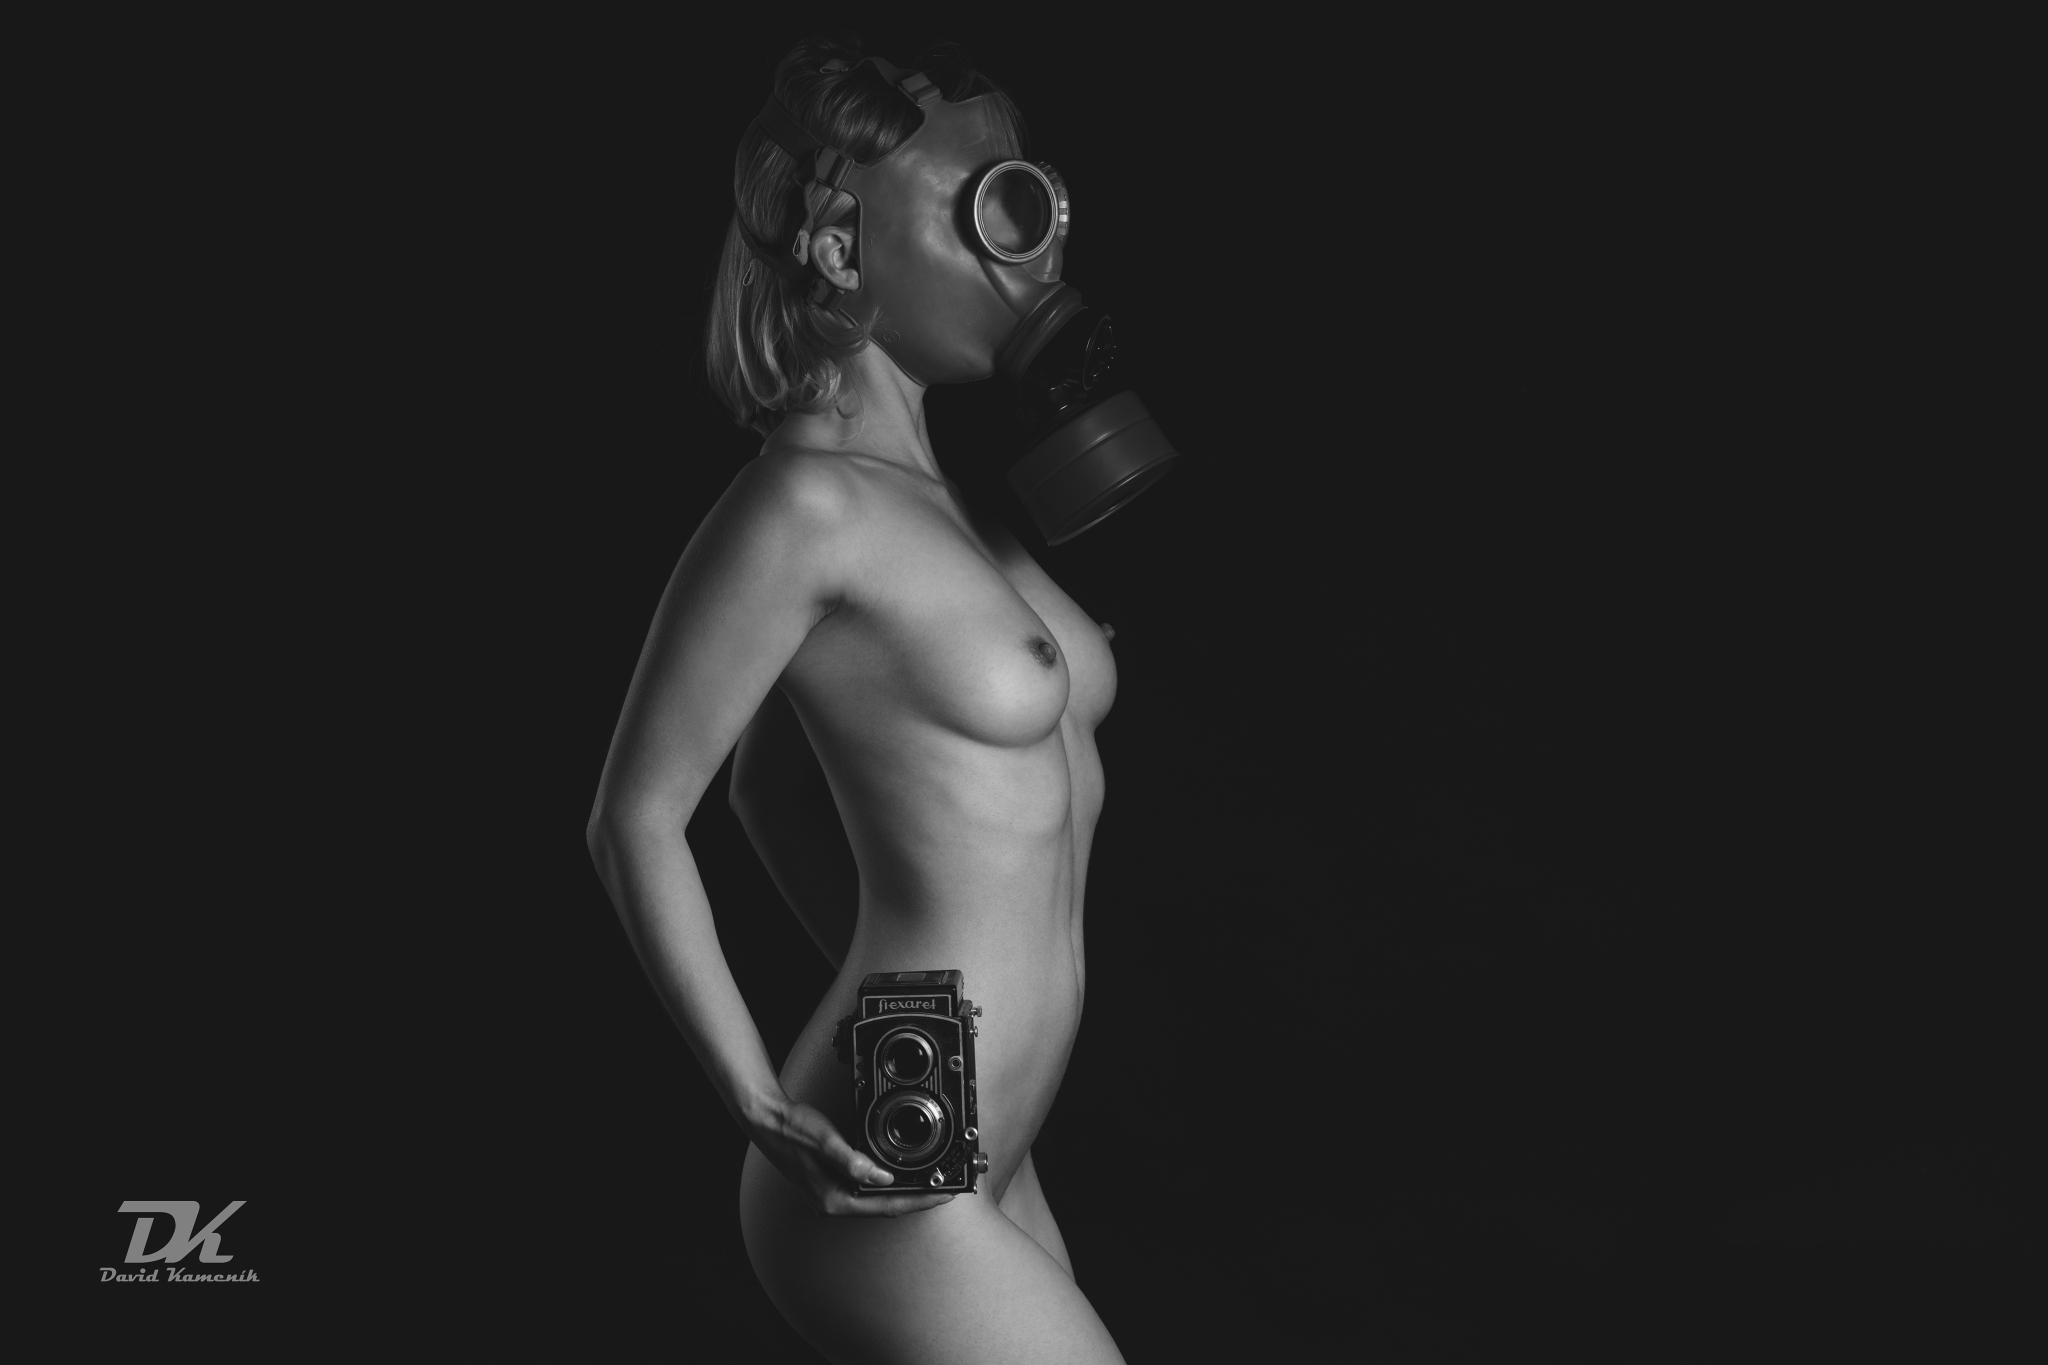 Gas mask & flexaret